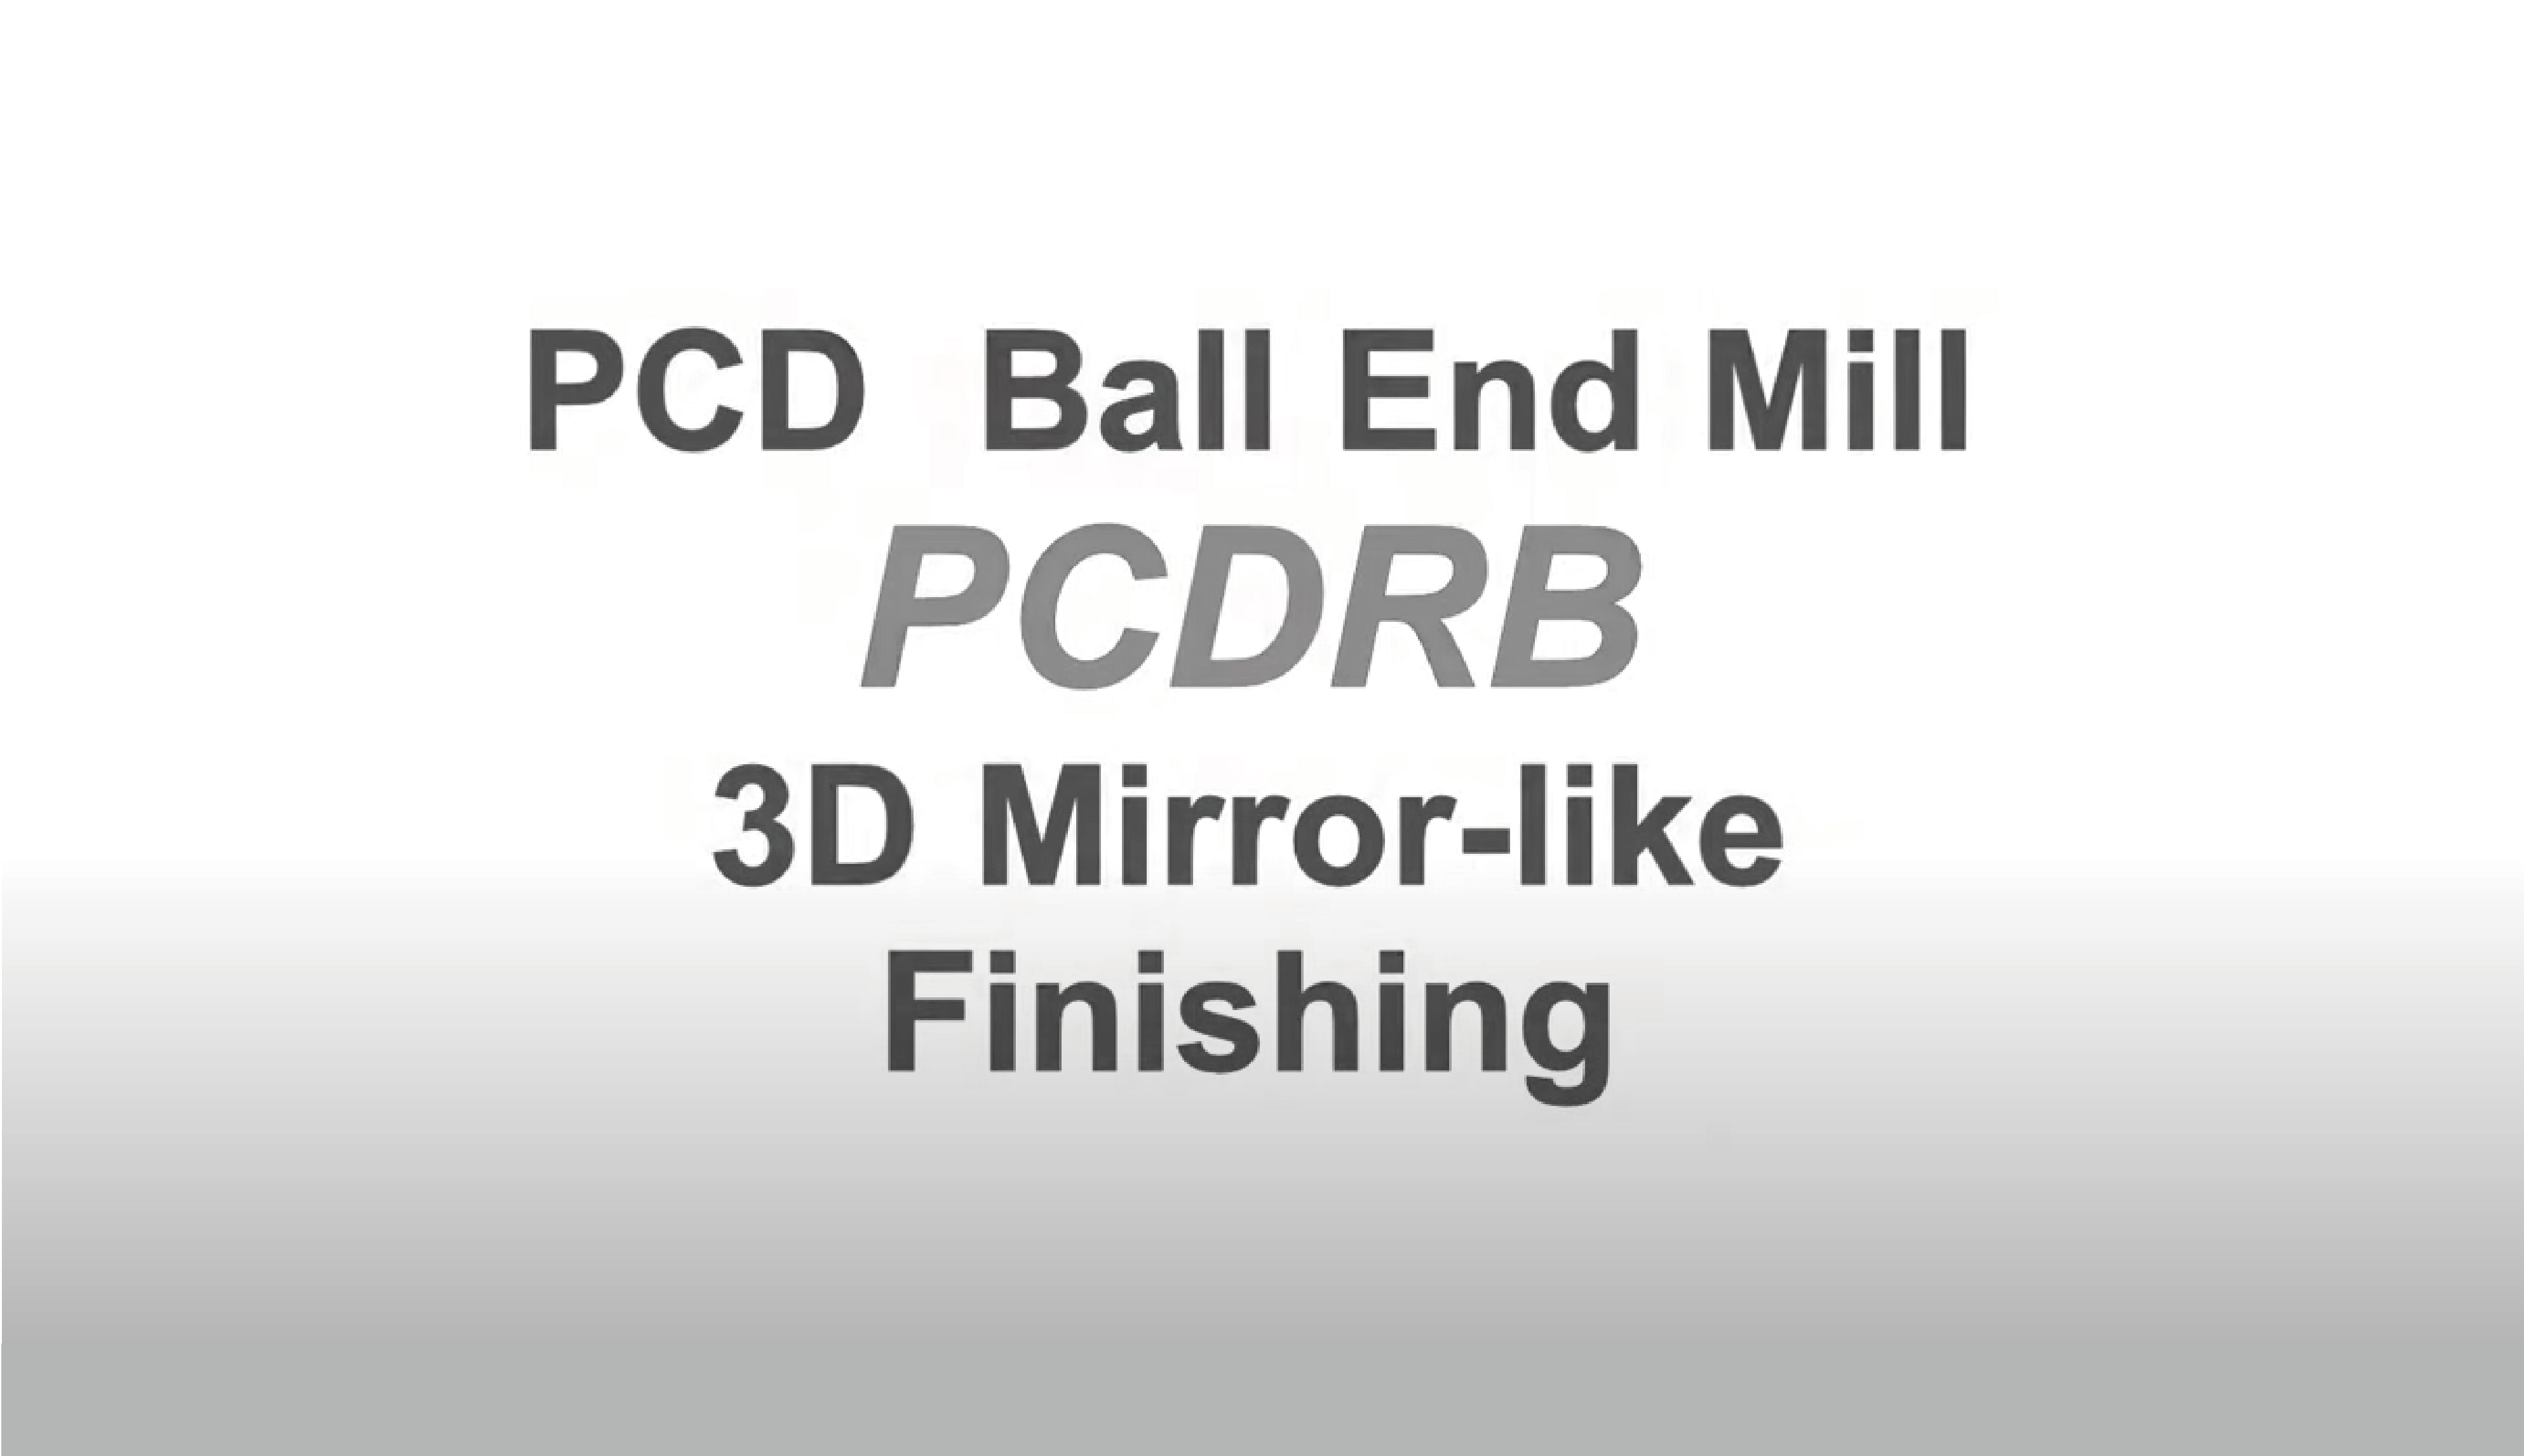 NS TOOL Machining: PCDRB 3D Mirror-like Finishing